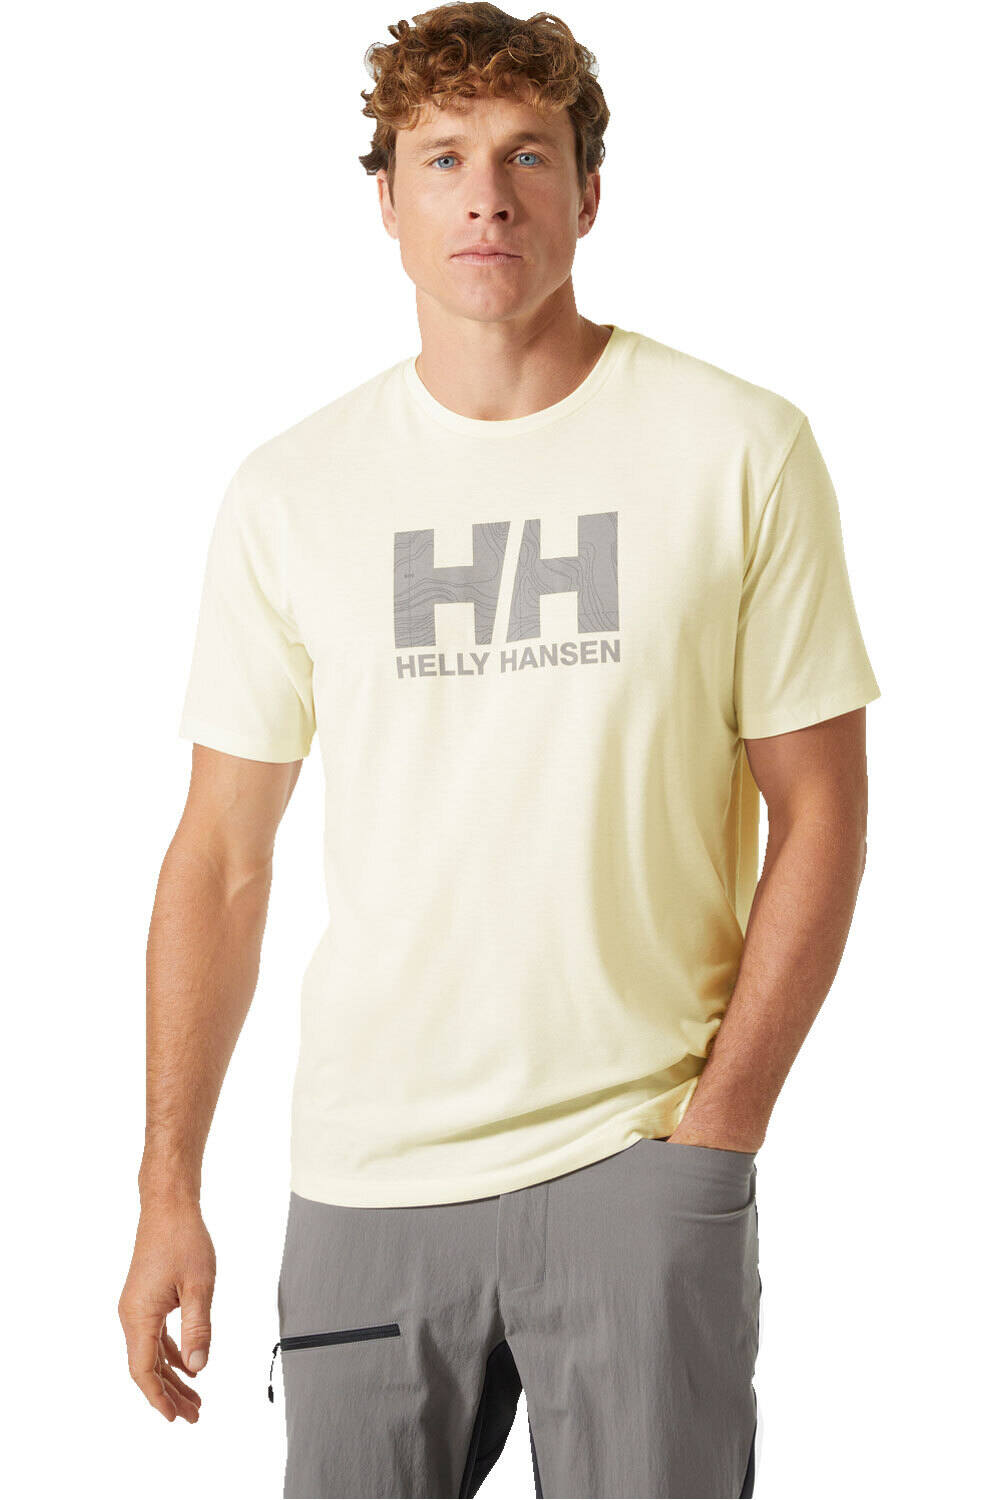 Helly Hansen camiseta montaña manga corta hombre SKOG RECYCLED GRAPHIC T-SHIRT vista frontal